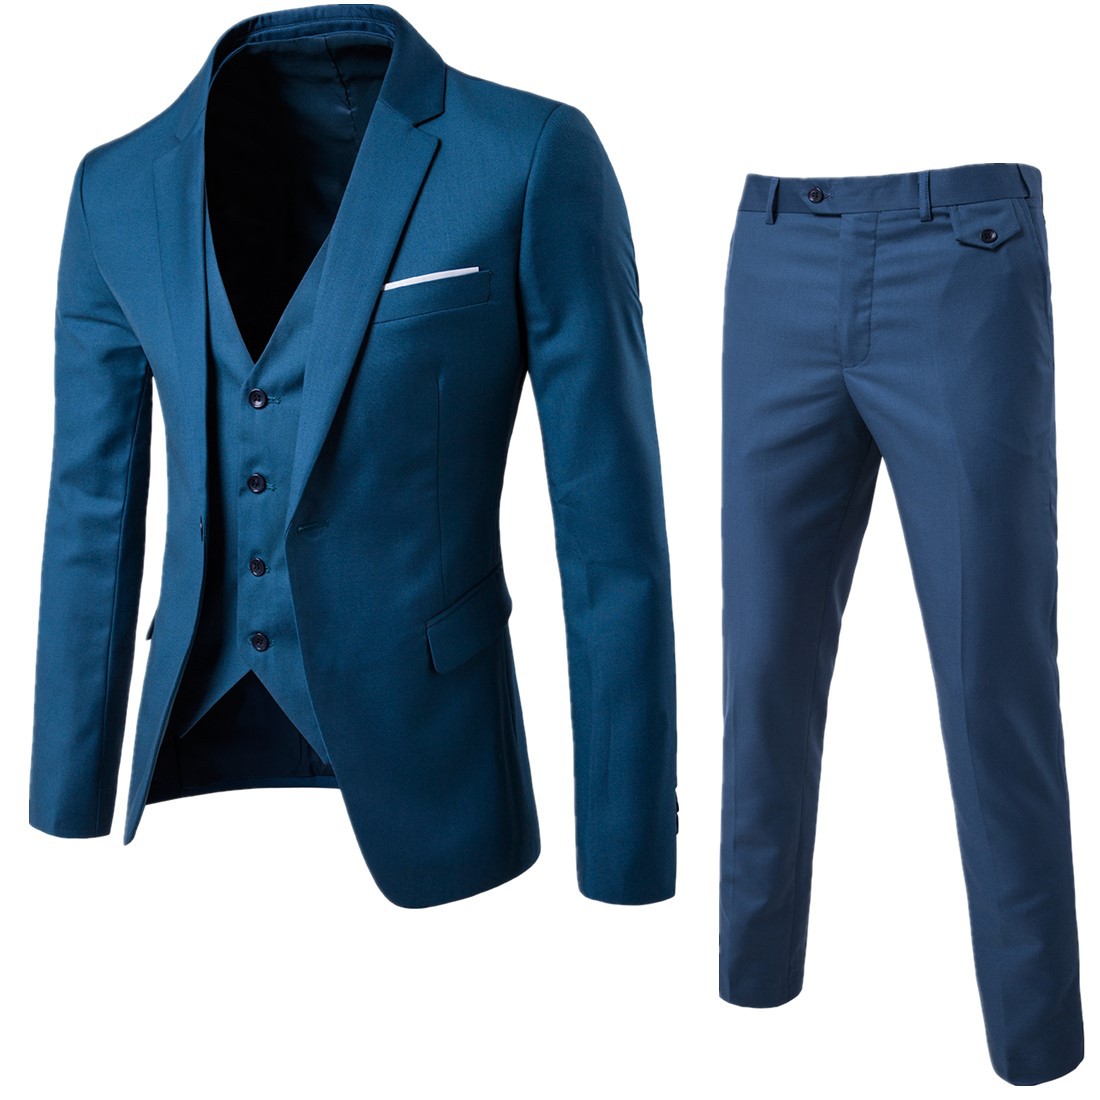 New Korean fashion slim fitting men's suit business professional formal suit work suit three piece set solid color